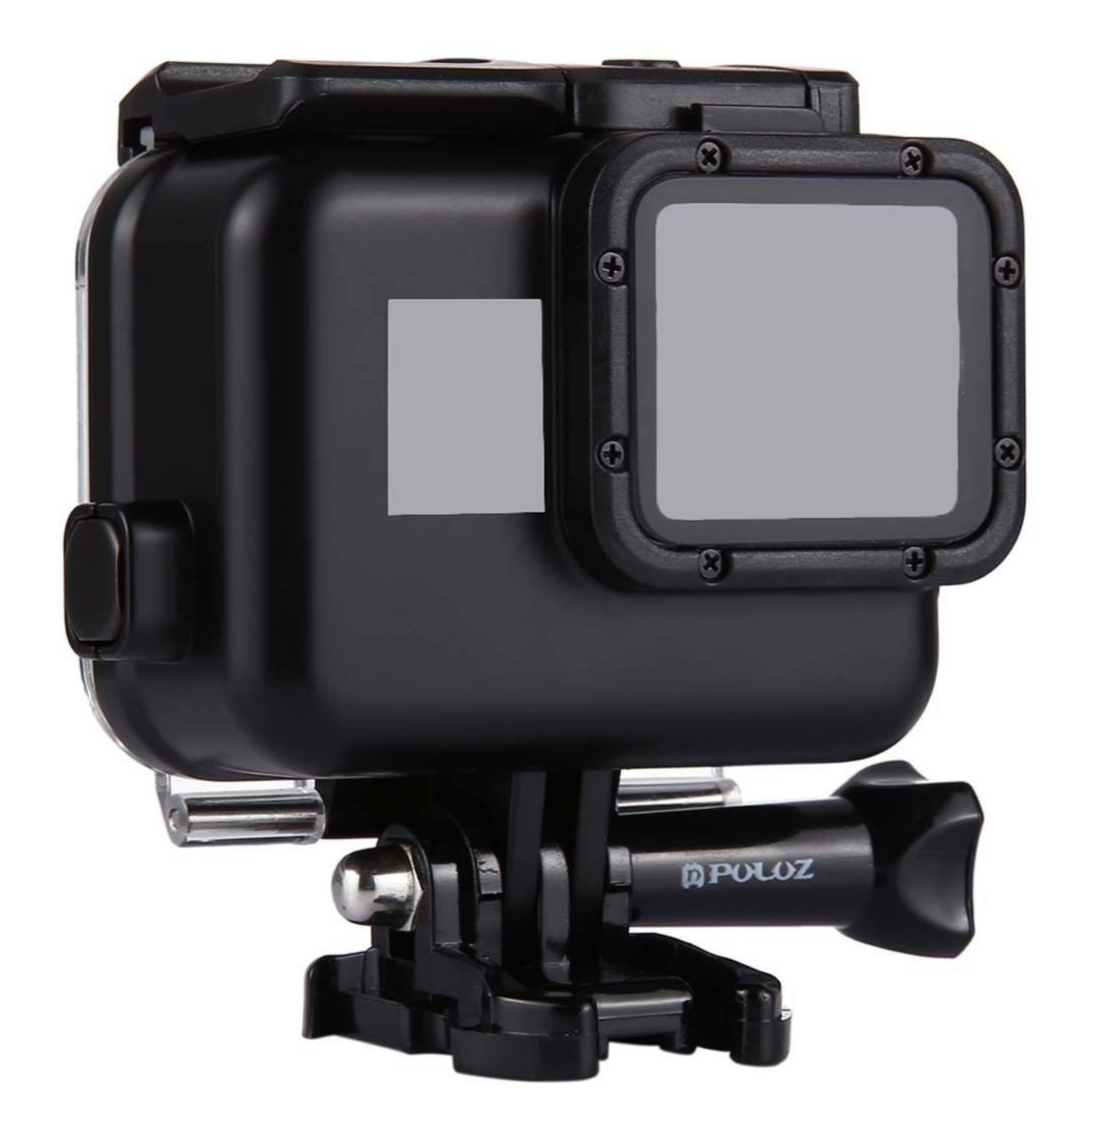 لوازم جانبی دوربین ورزشی پلوز-puluz کاور ضد آب مدل Back Cover مناسب برای دوربین ورزشی گوپرو هیرو 5/6